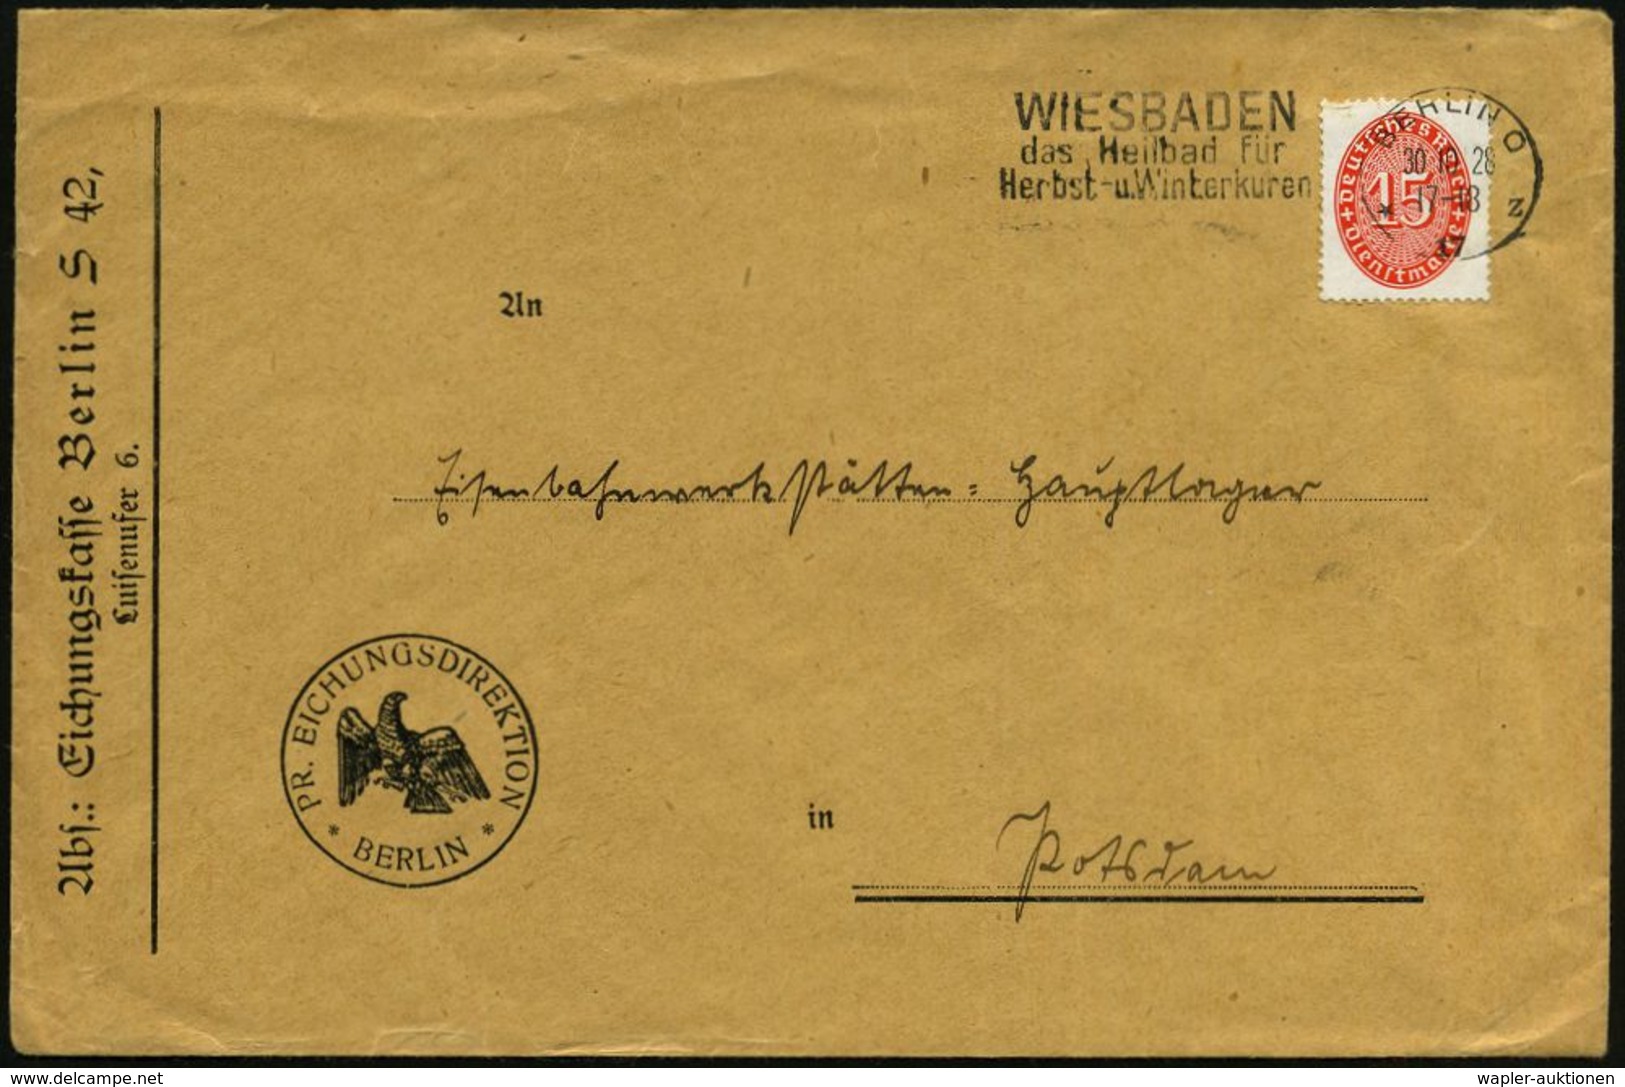 WIEGEN & MESSEN / WAAGE / METER : Berlin S 42 1928 (30.10.) Dienst-Bf.: PR. EICHUNGSDIREKTION/Eichungskasse Berlin (preu - Unclassified